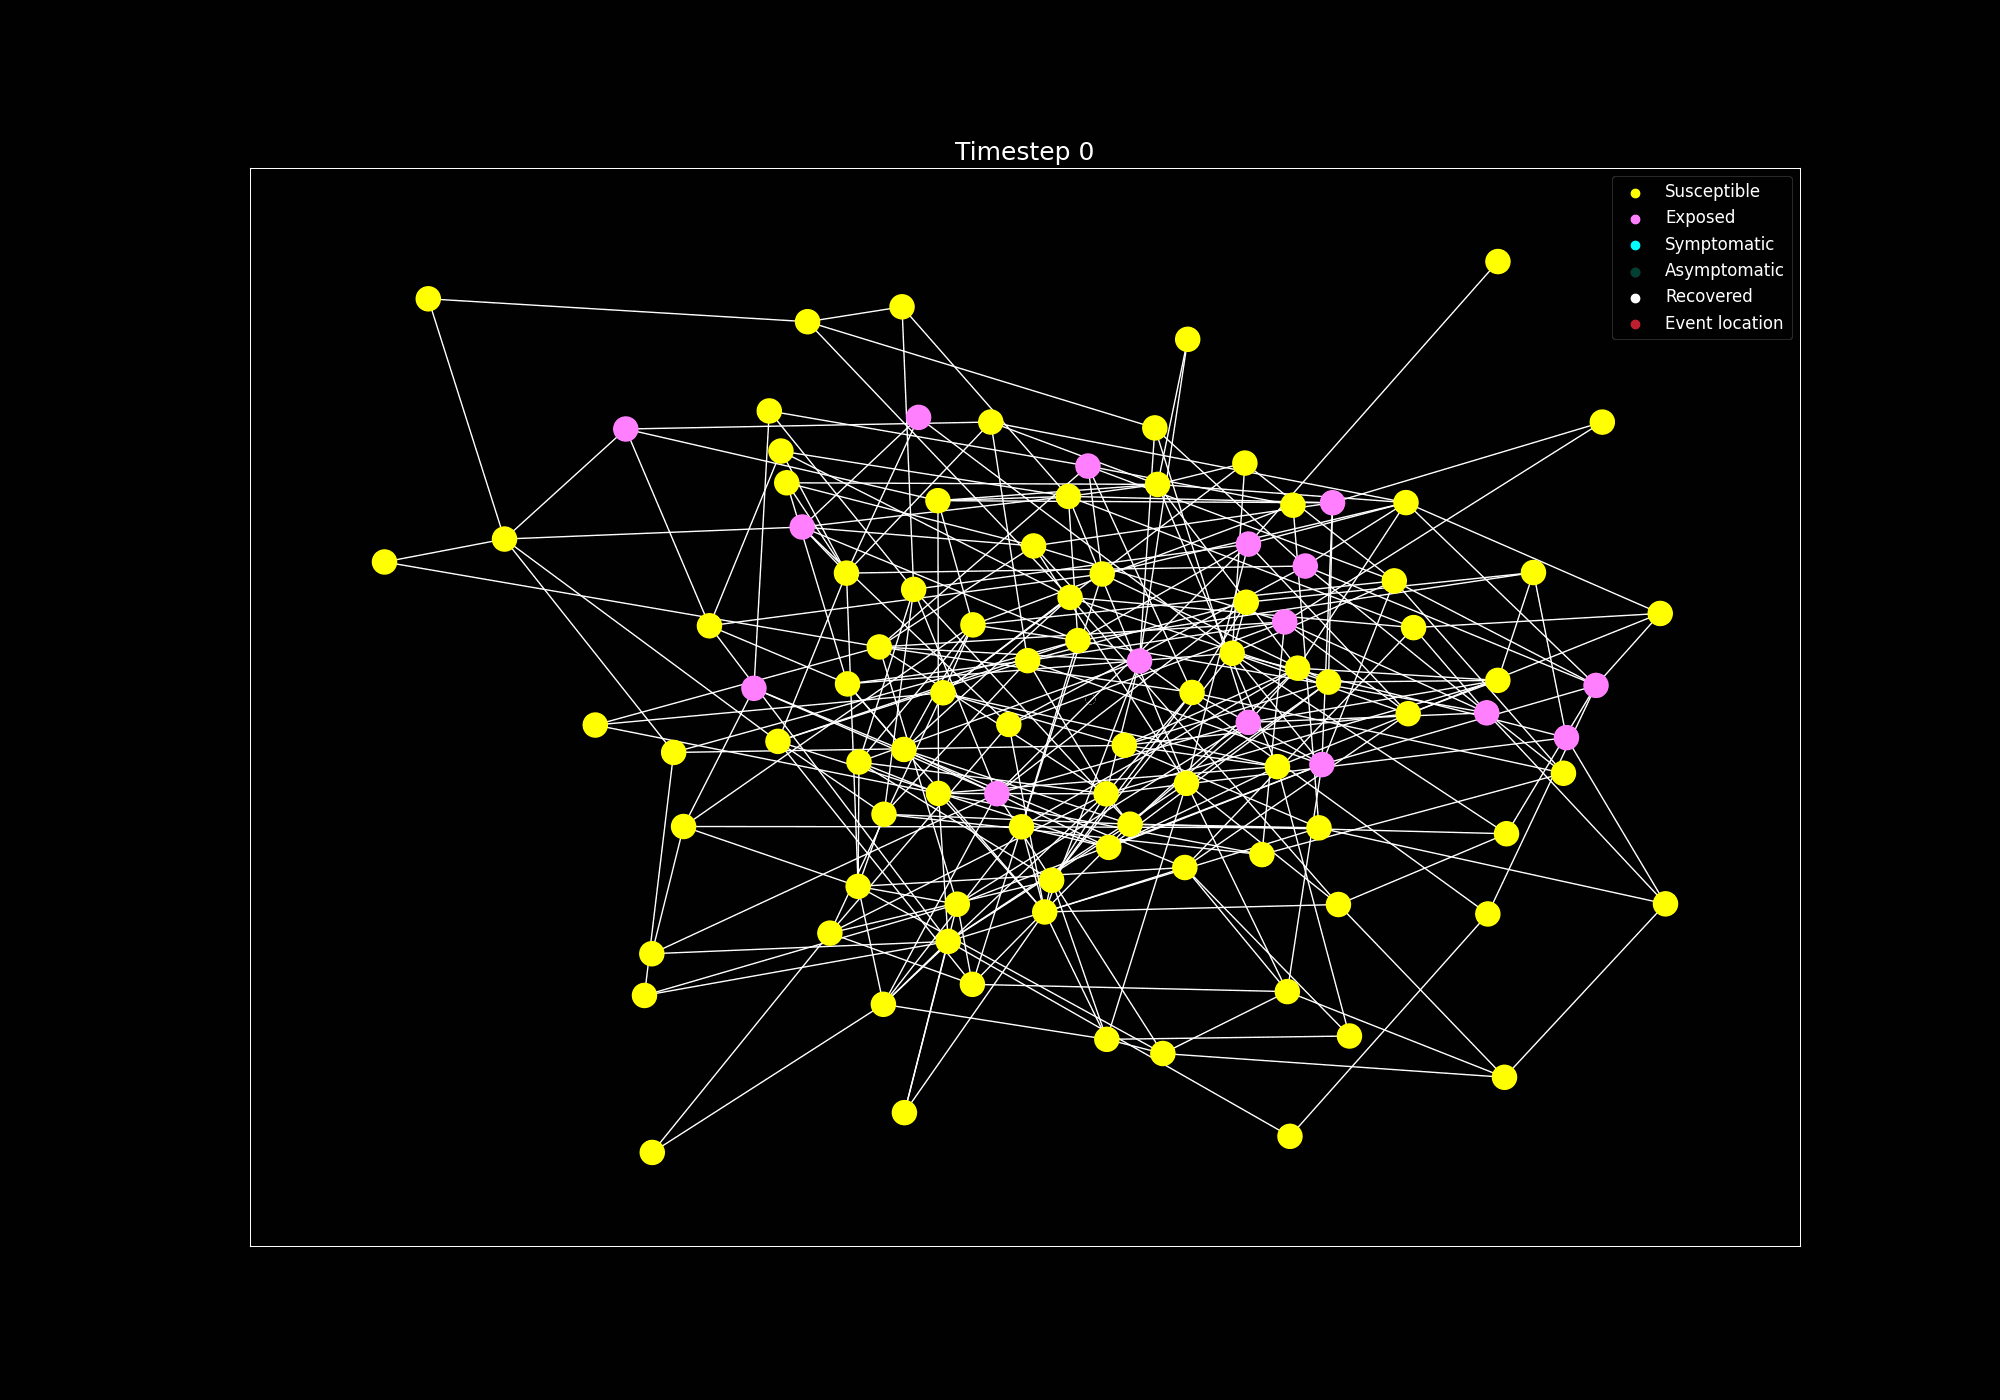 Dynamic Network